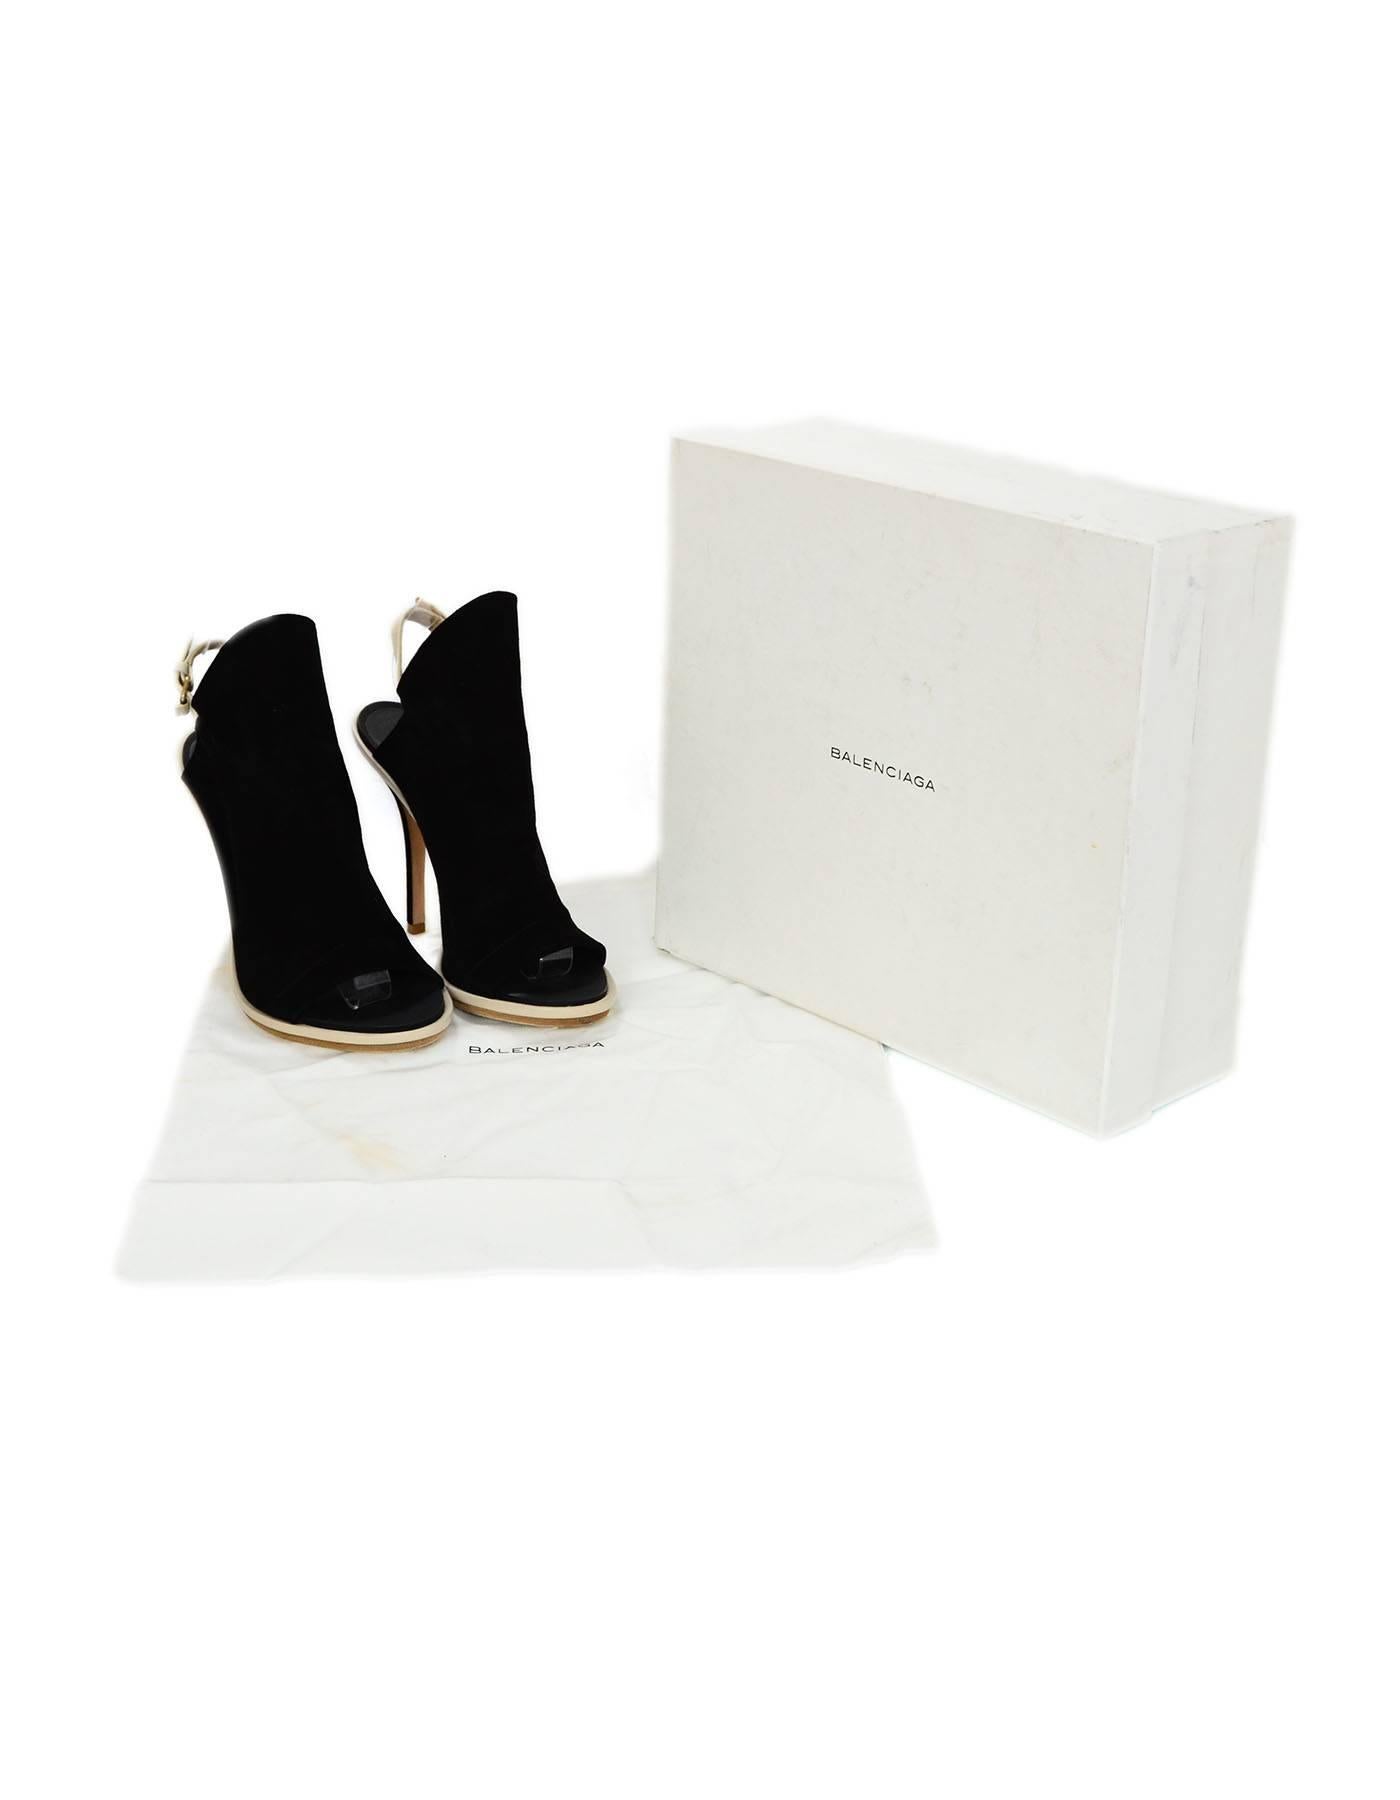 Balenciaga Black Suede Glove Open-Toe Sandals Sz 39 rt. $735 1